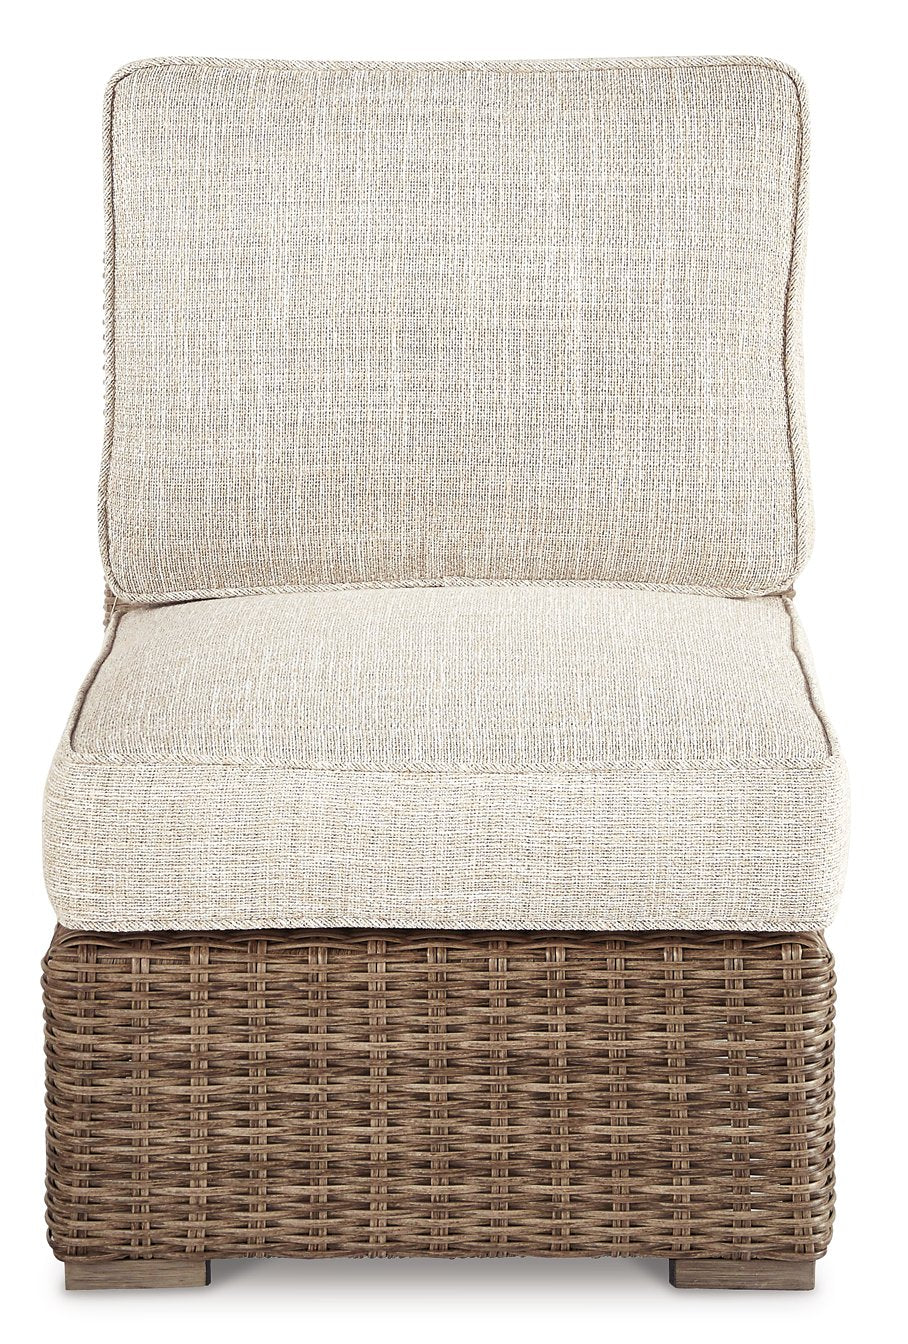 Beachcroft Armless Chair with Cushion Beachcroft Armless Chair with Cushion Half Price Furniture